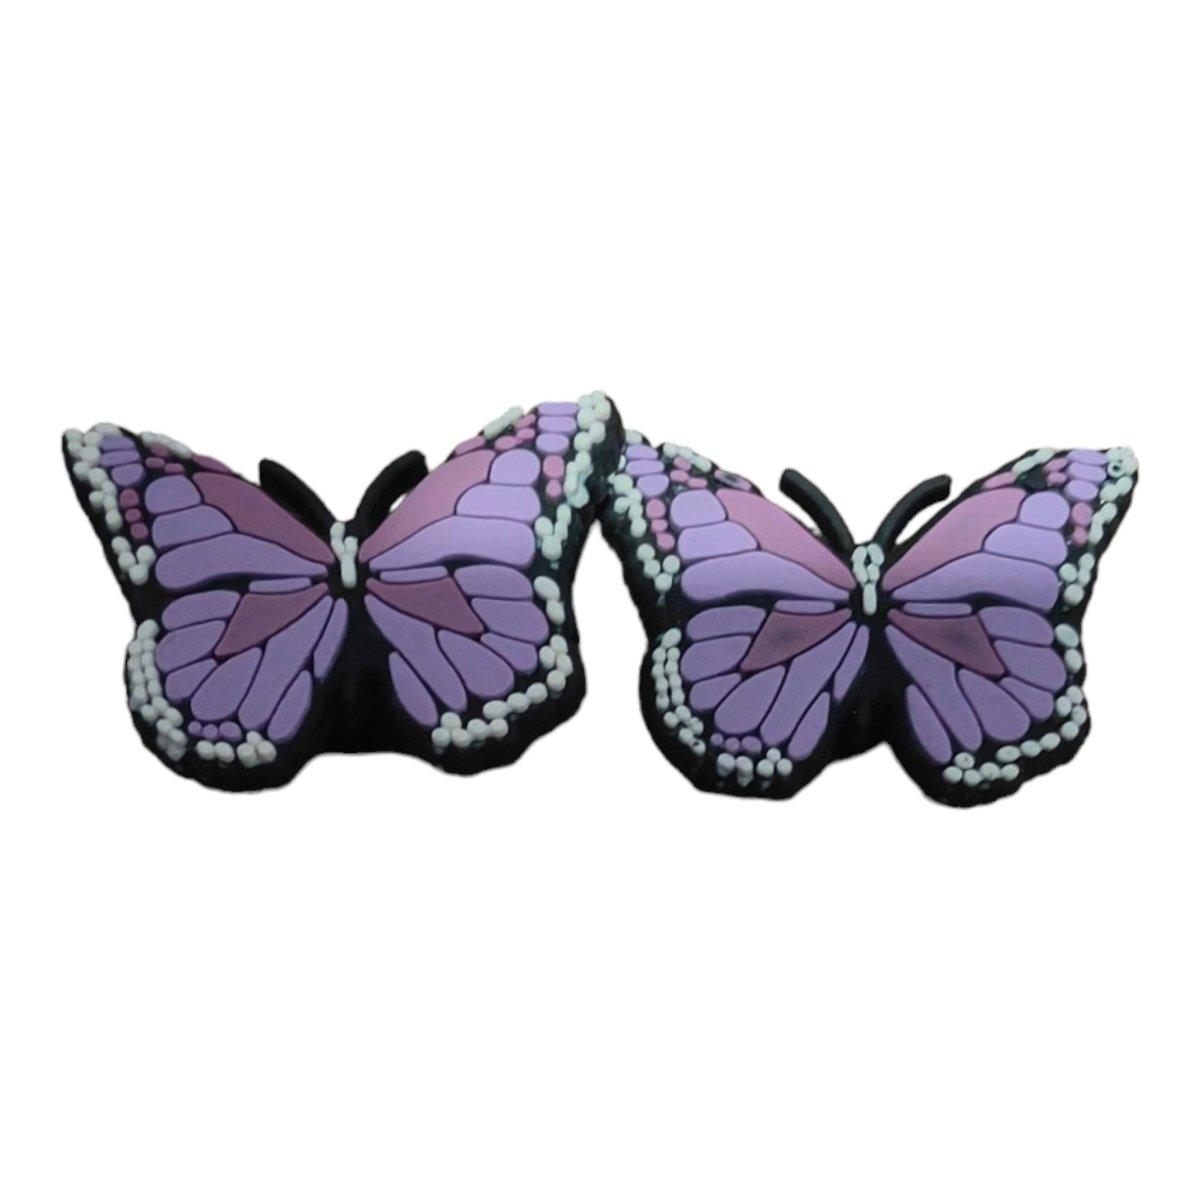 Butterfly Shoe Charms - Alcyone213k